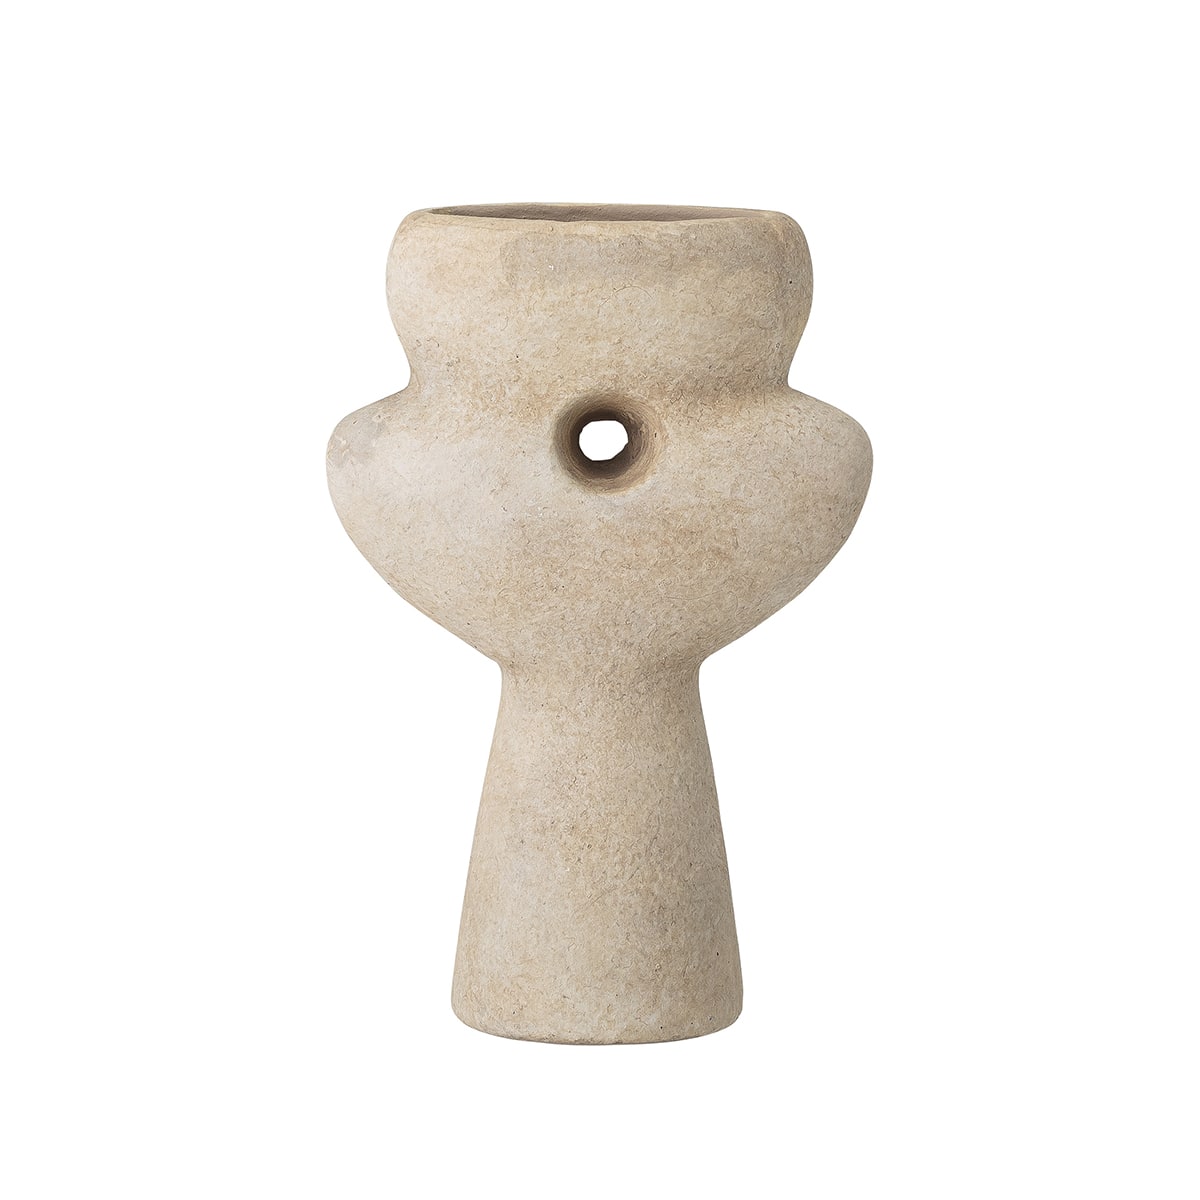 Ngoie - Decorative terracotta vase